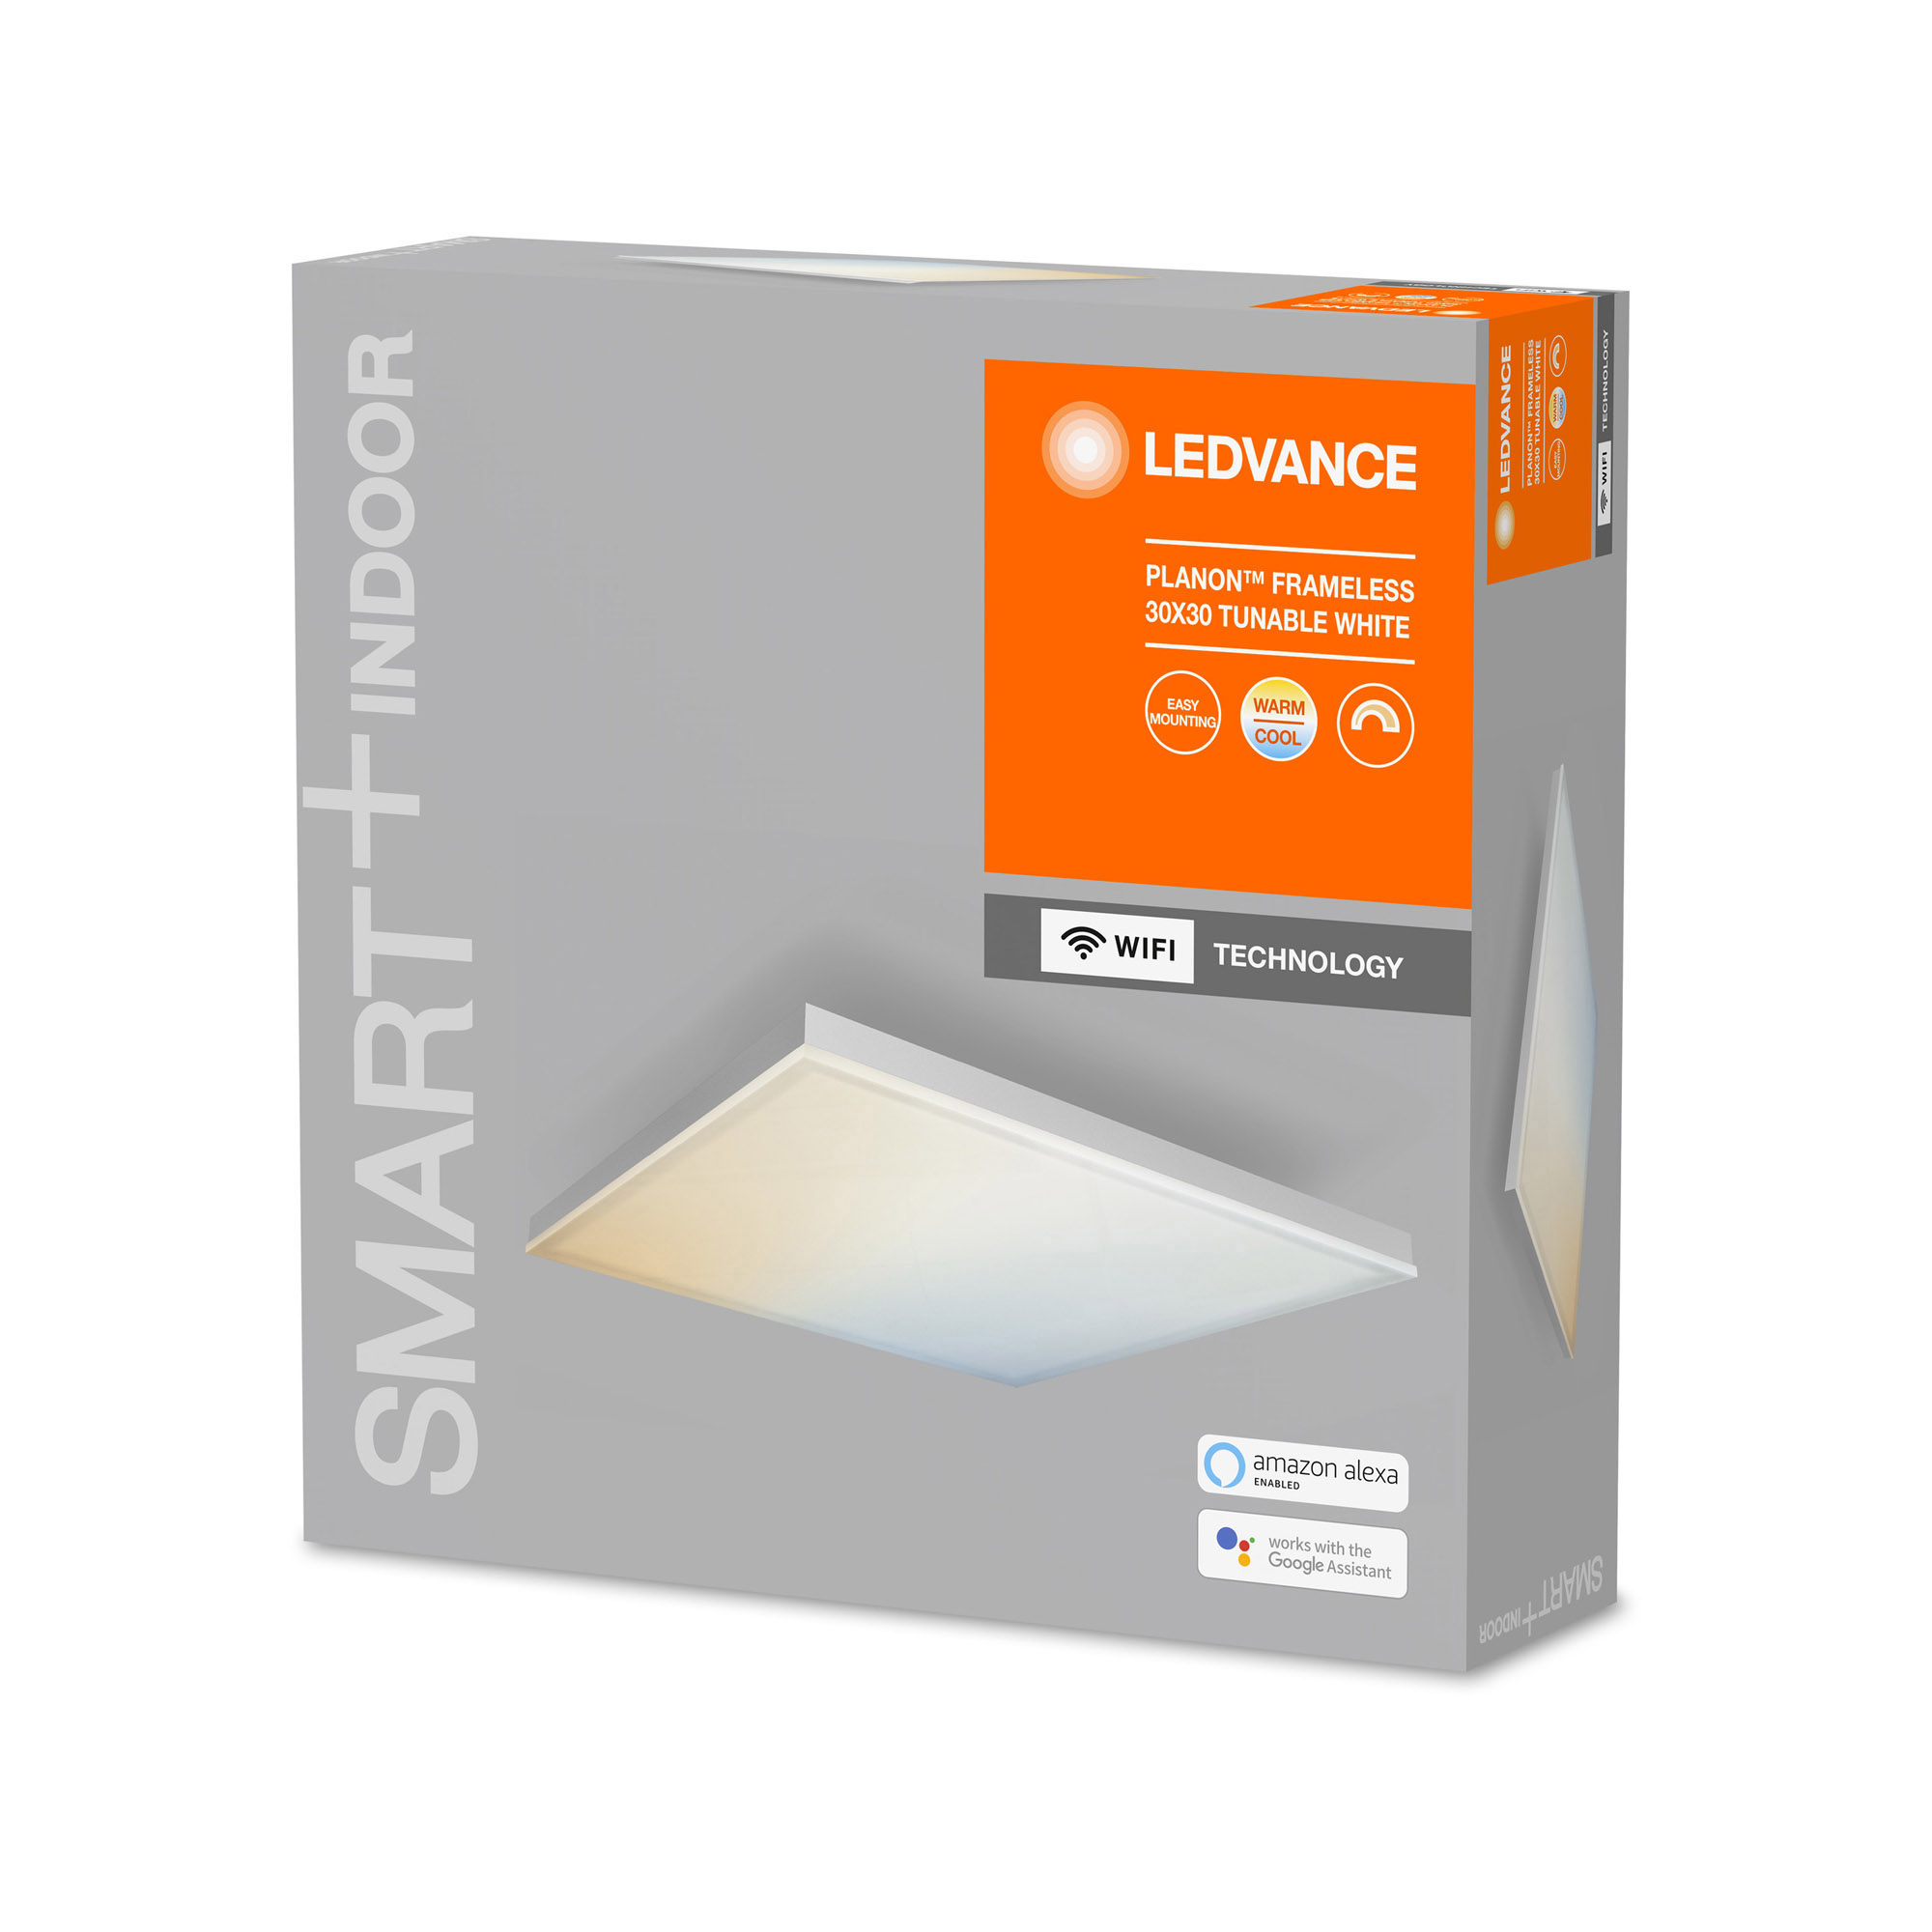 LEDVANCE SMART+ WiFi Tunable White LED Panel PLANON FRAMELESS 30x30cm 1600lm